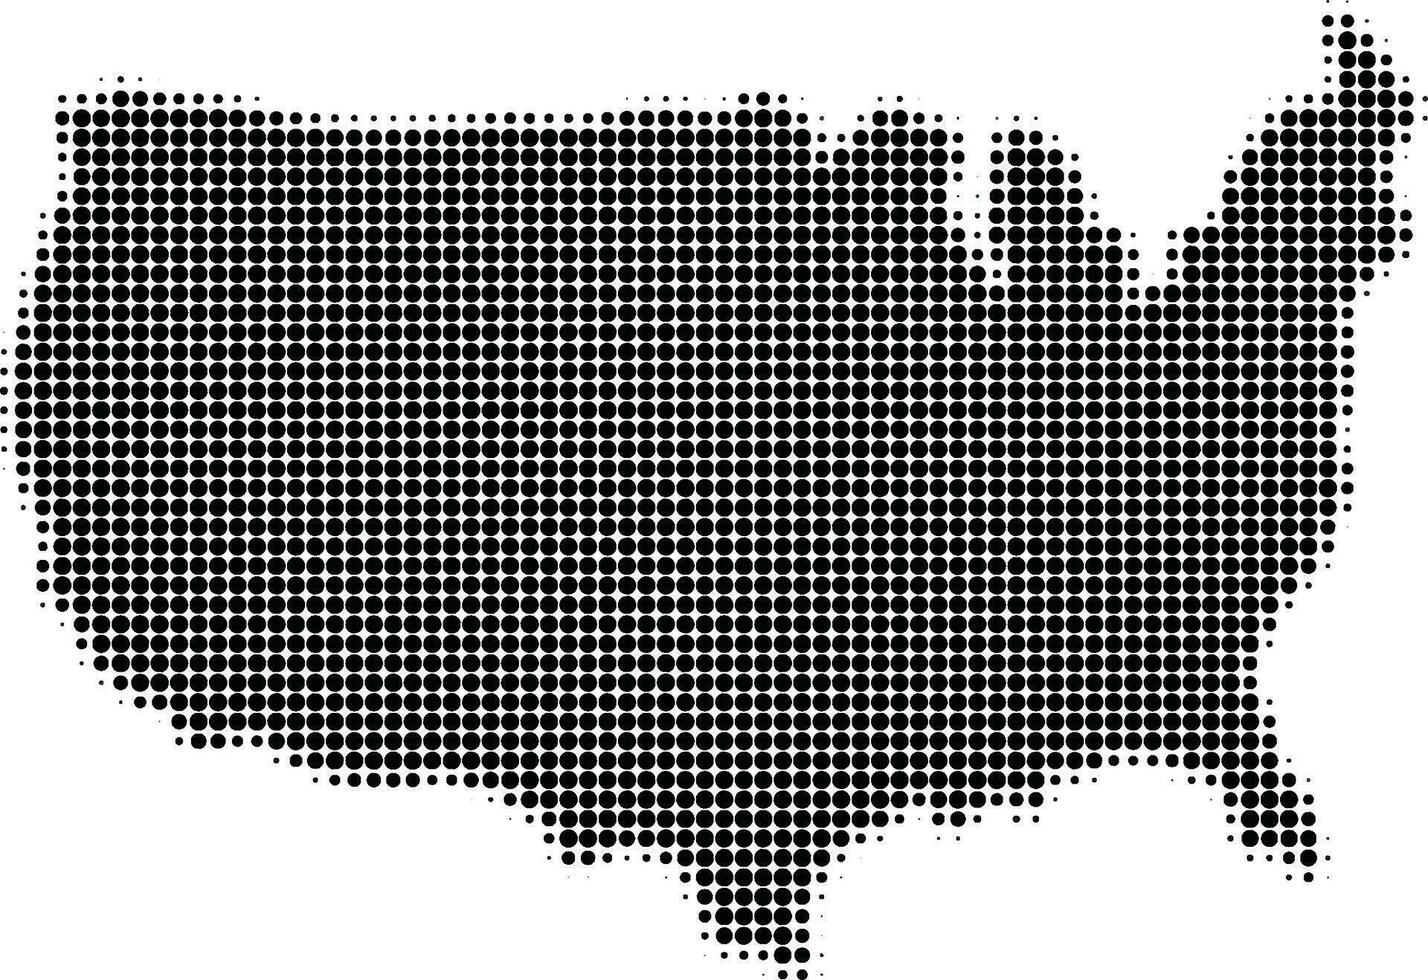 mezzitoni carta geografica di America, carta geografica di America mezzitoni stile vettore